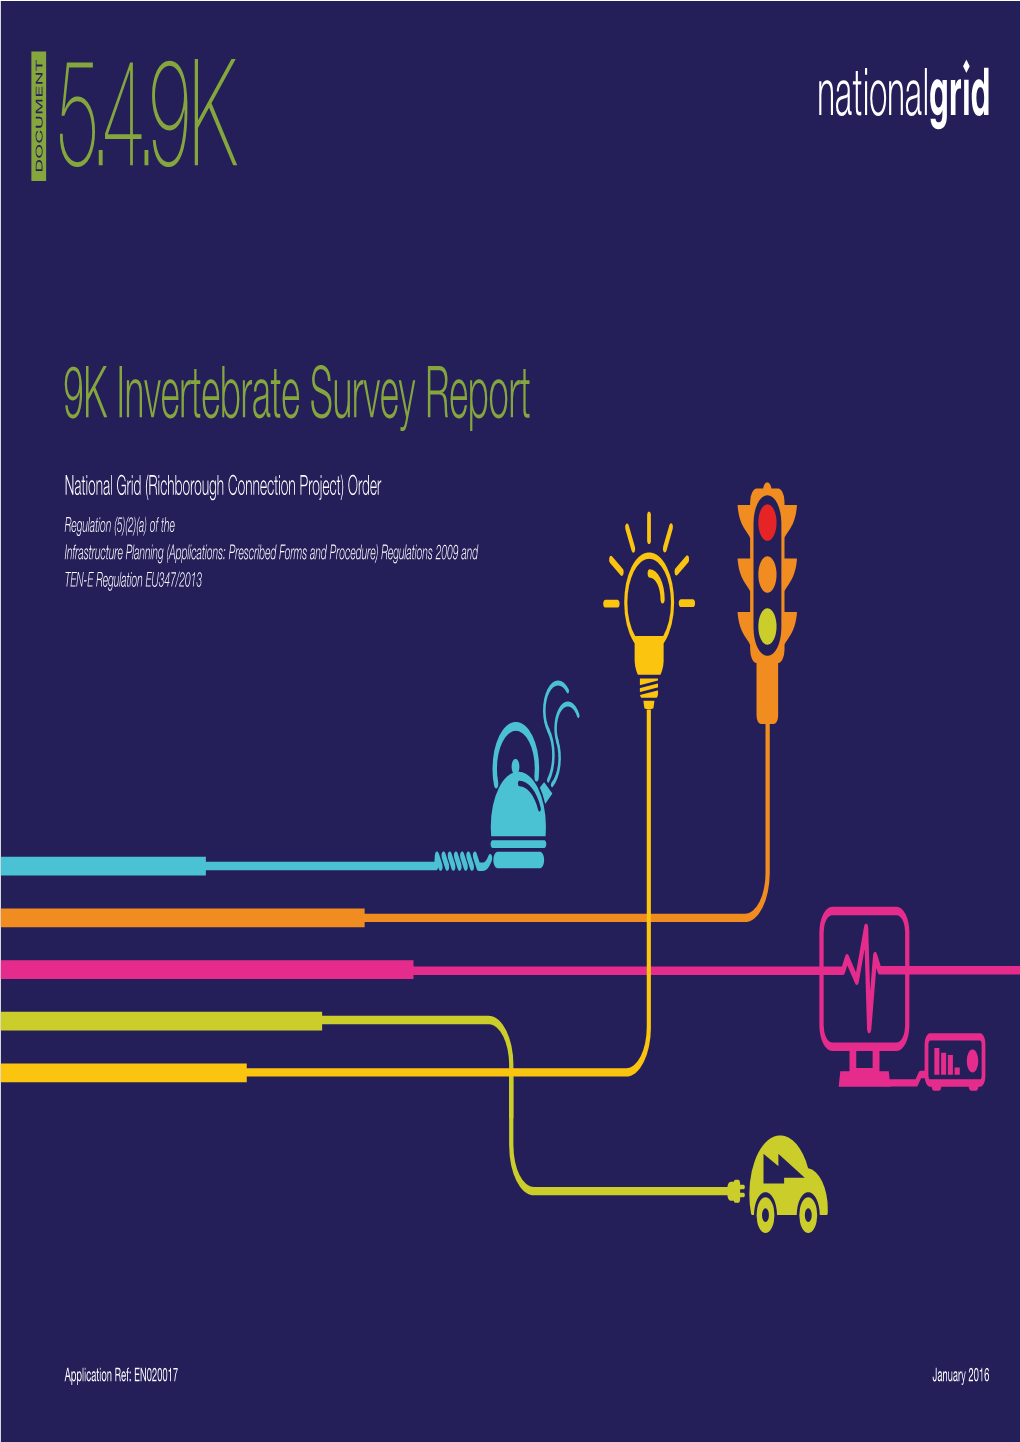 9K Invertebrate Survey Report